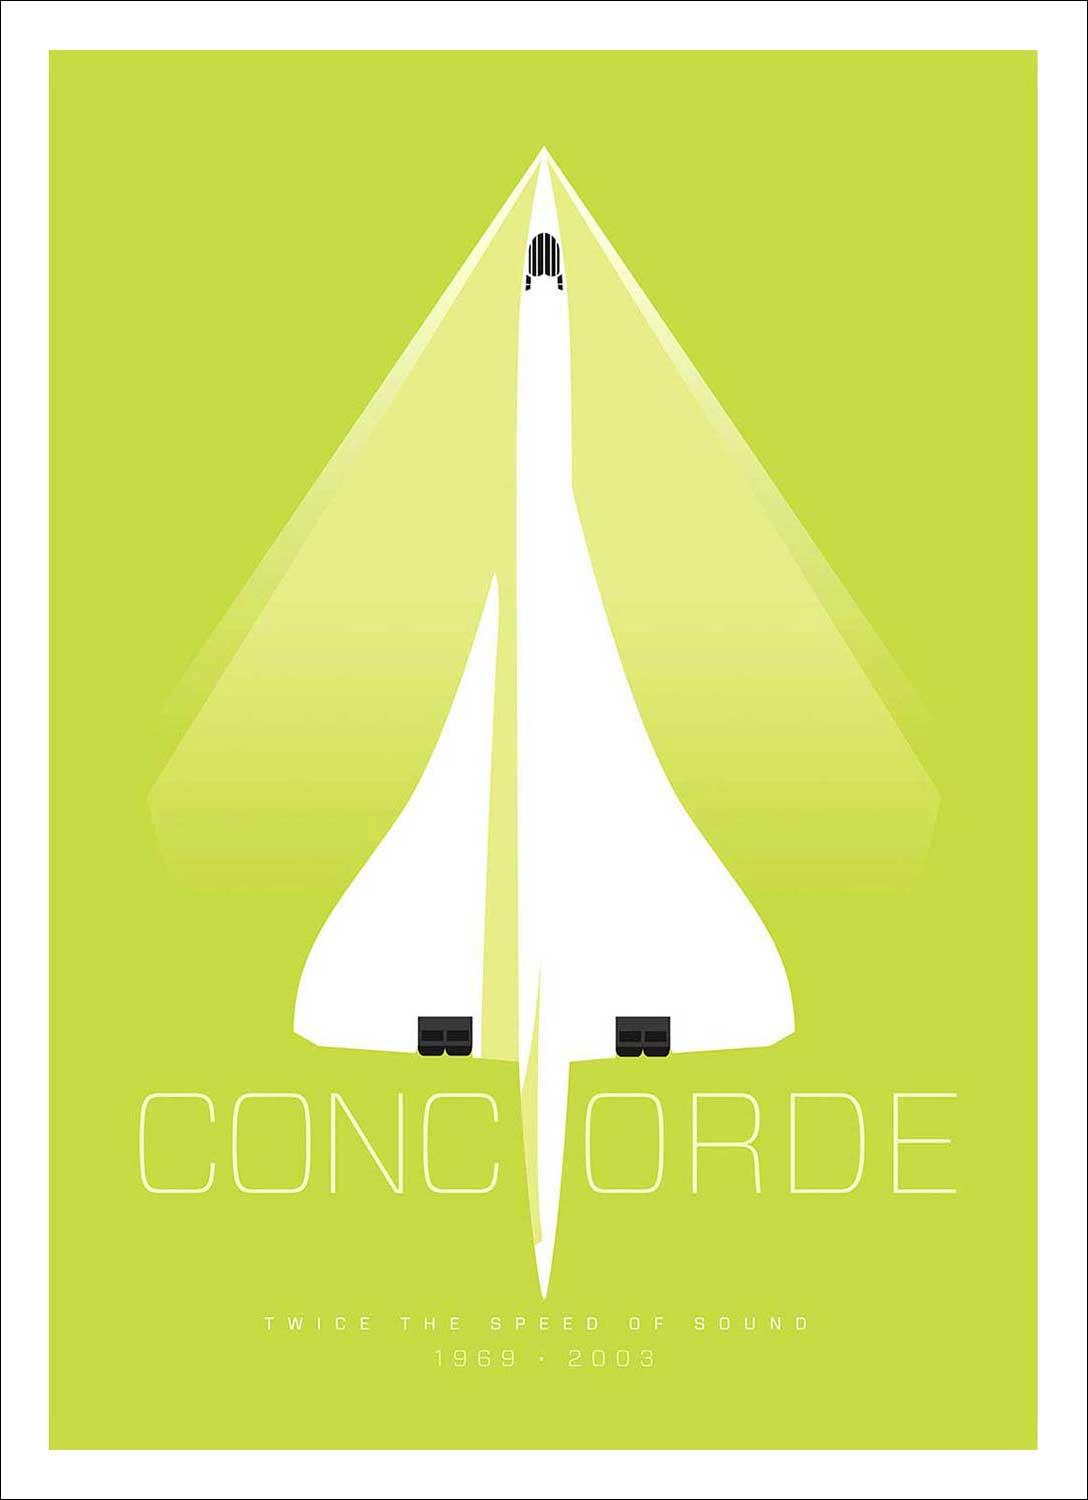 Concorde (Lime Green) Art Print from an original illustration by artist Peter McDermott